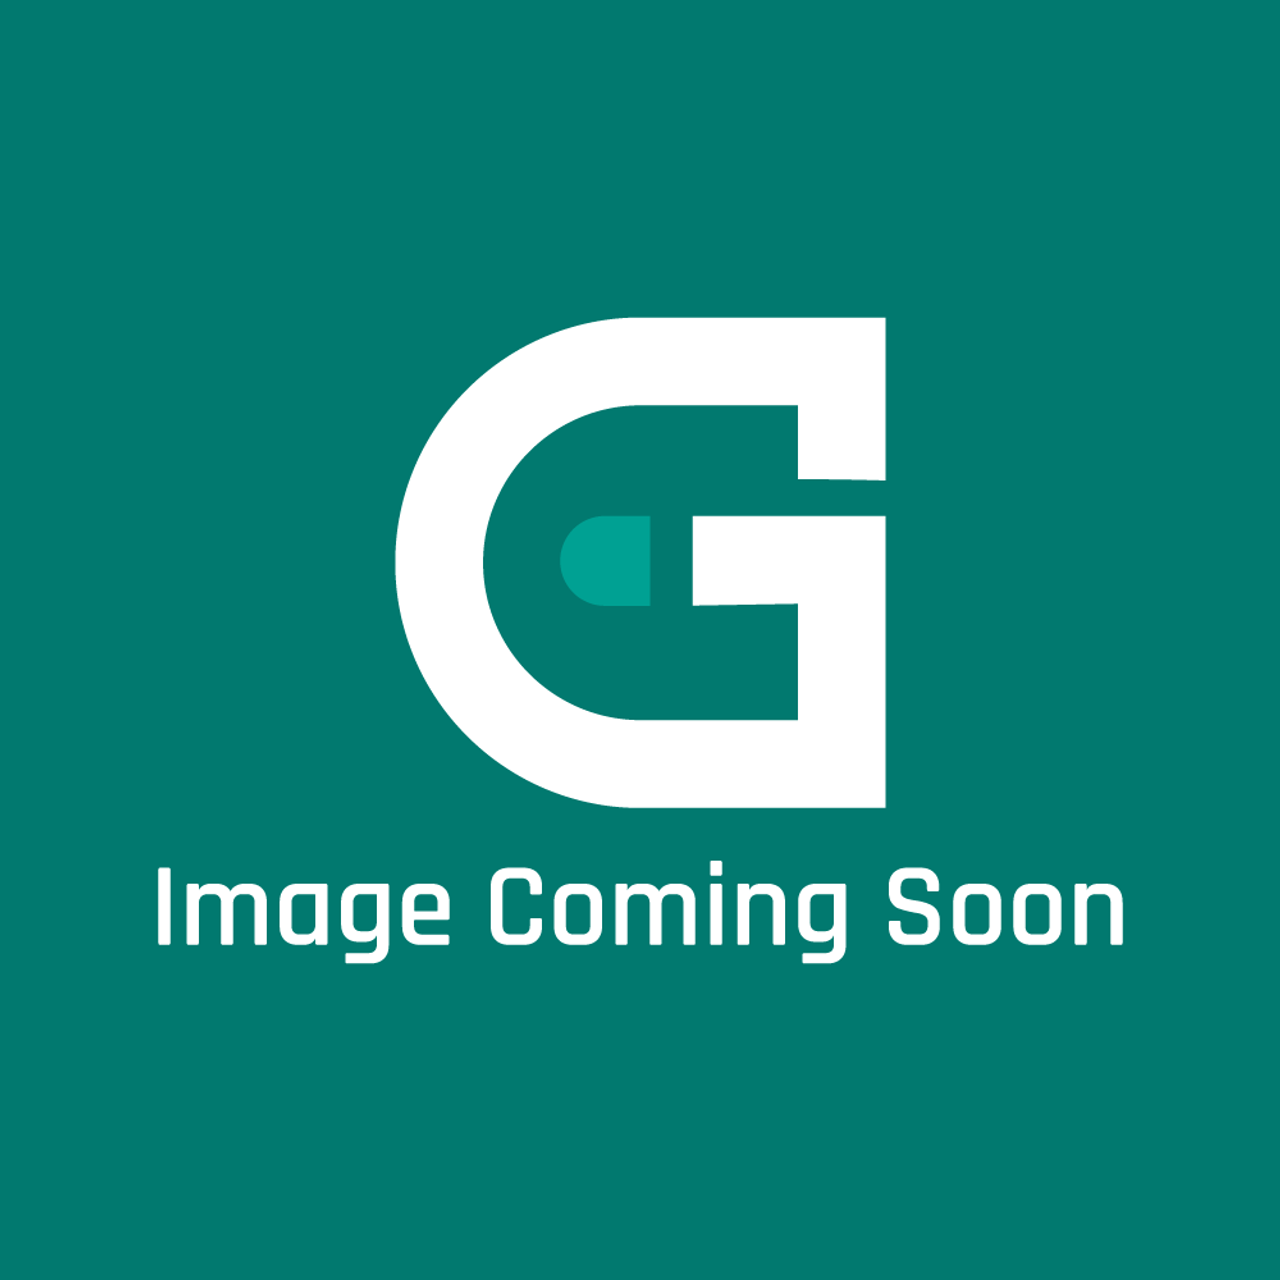 Garland G01976-01-7 - Grease Diverter Assy - Image Coming Soon!